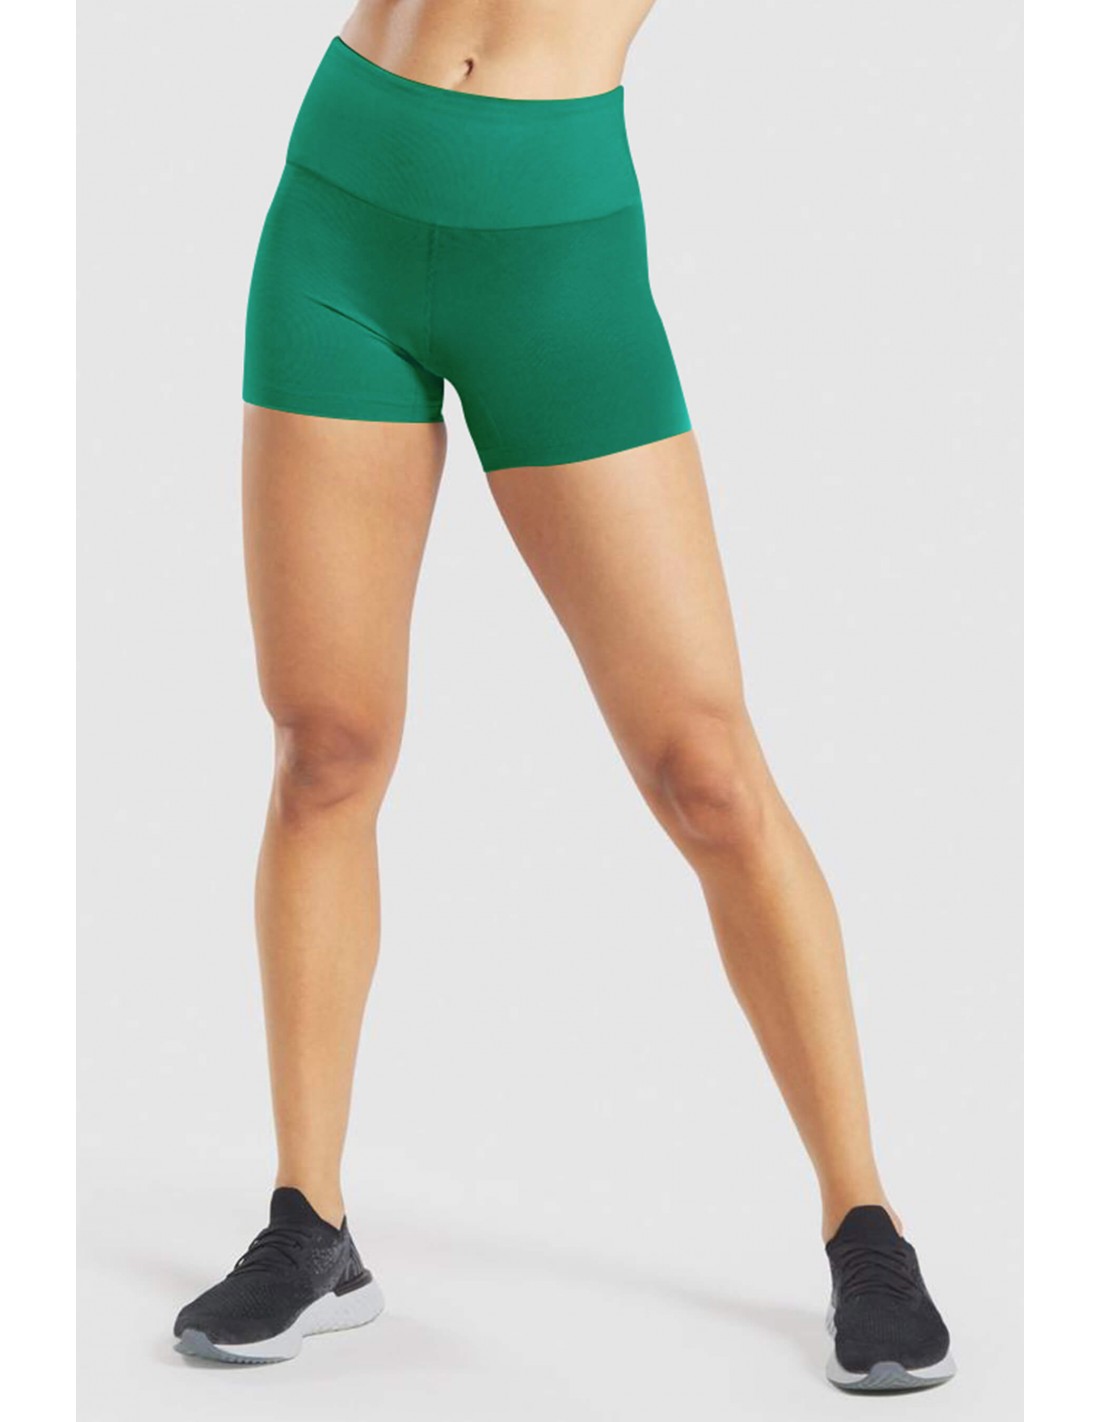 Conjunto deportivo mujer unicolor verde claro shorts talla s GENERICO